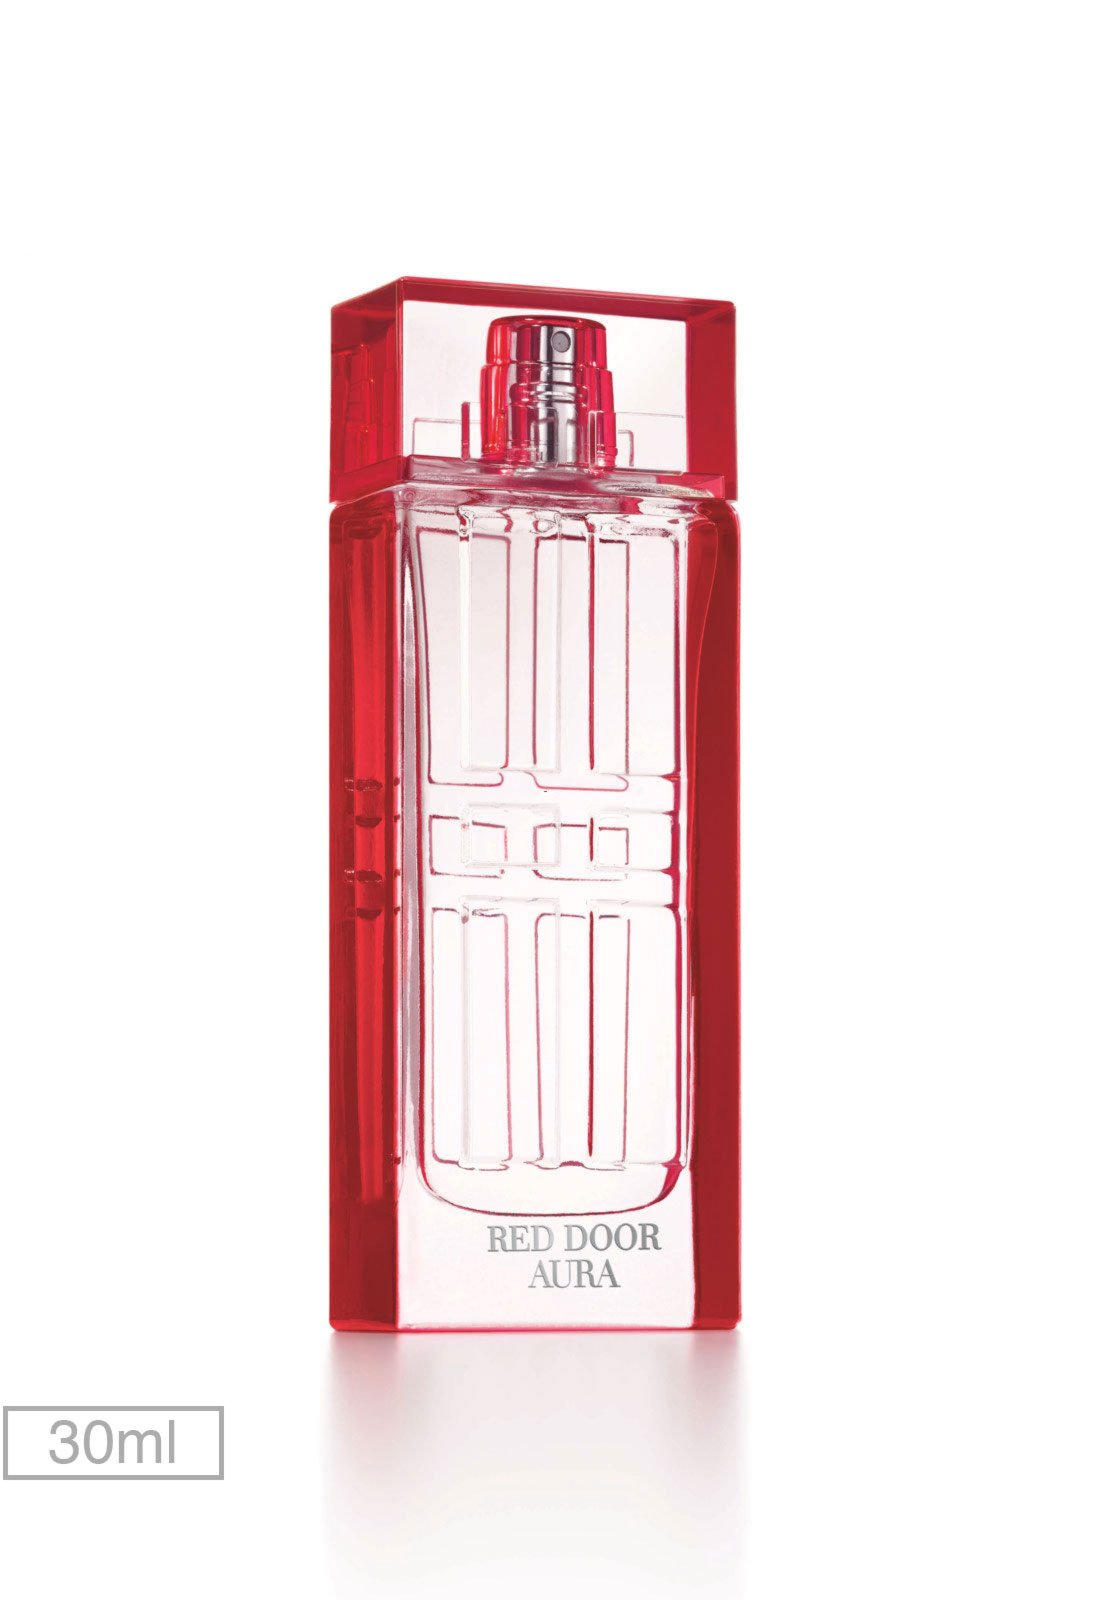 Perfume Red Door Aura Elizabeth Arden 30ml - Compre Agora Brasil